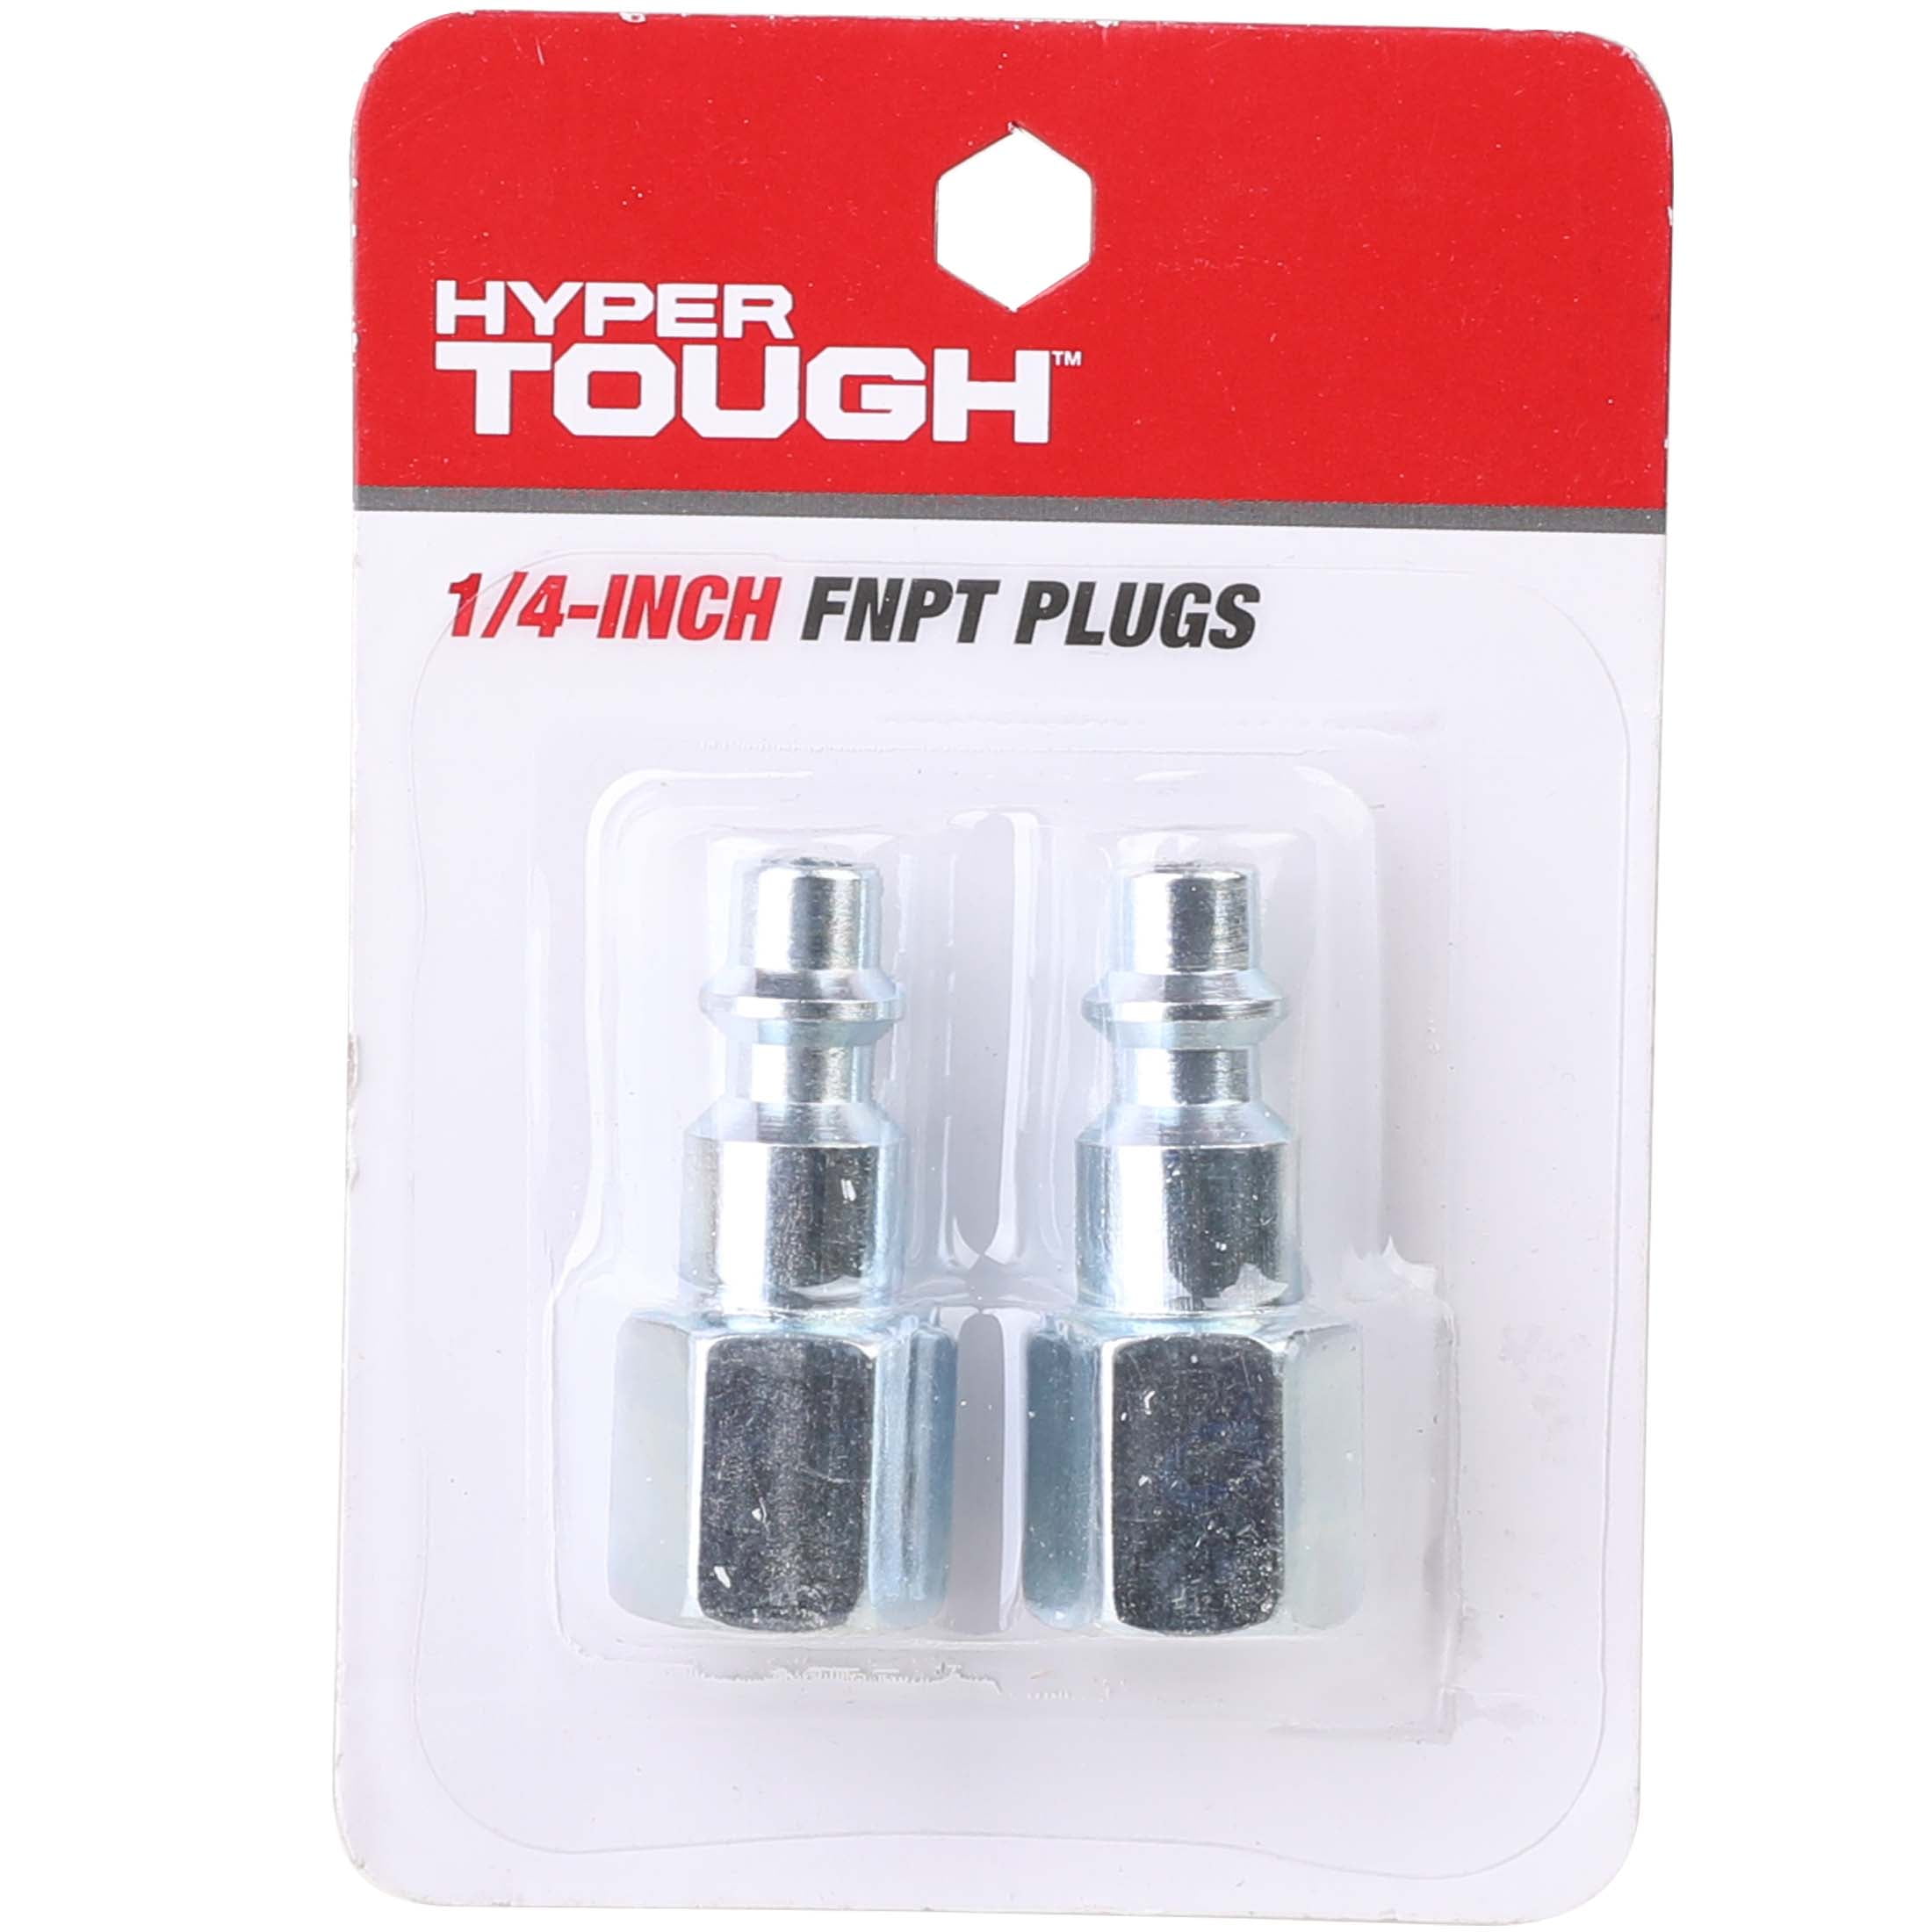 Hyper Tough 1/4-inch Air Industrial Steel FNPT Plug Set, Model 12-235-2HT, 2pcs Pack